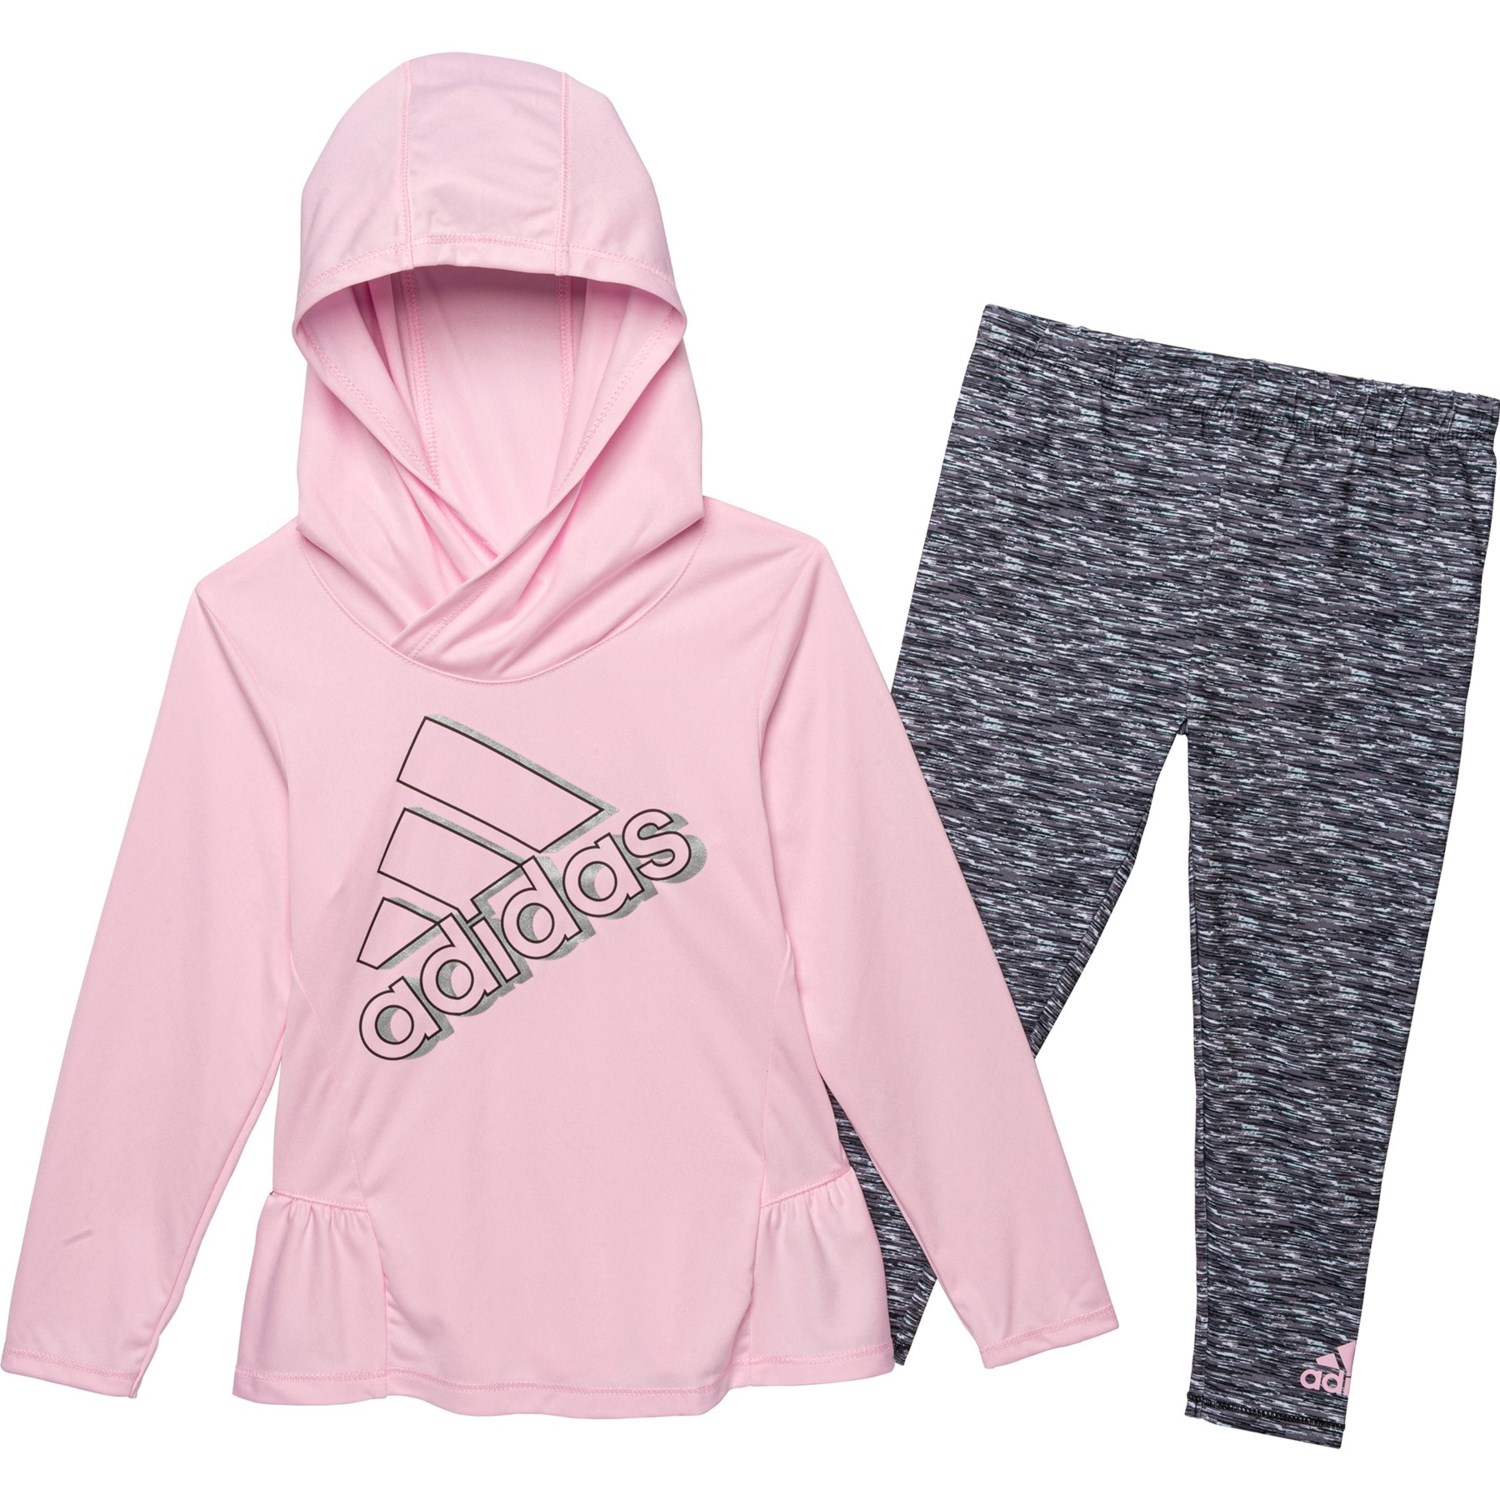 Adidas Toddler Girls Hooded Shirt and AOP Tights Set - Long Sleeve